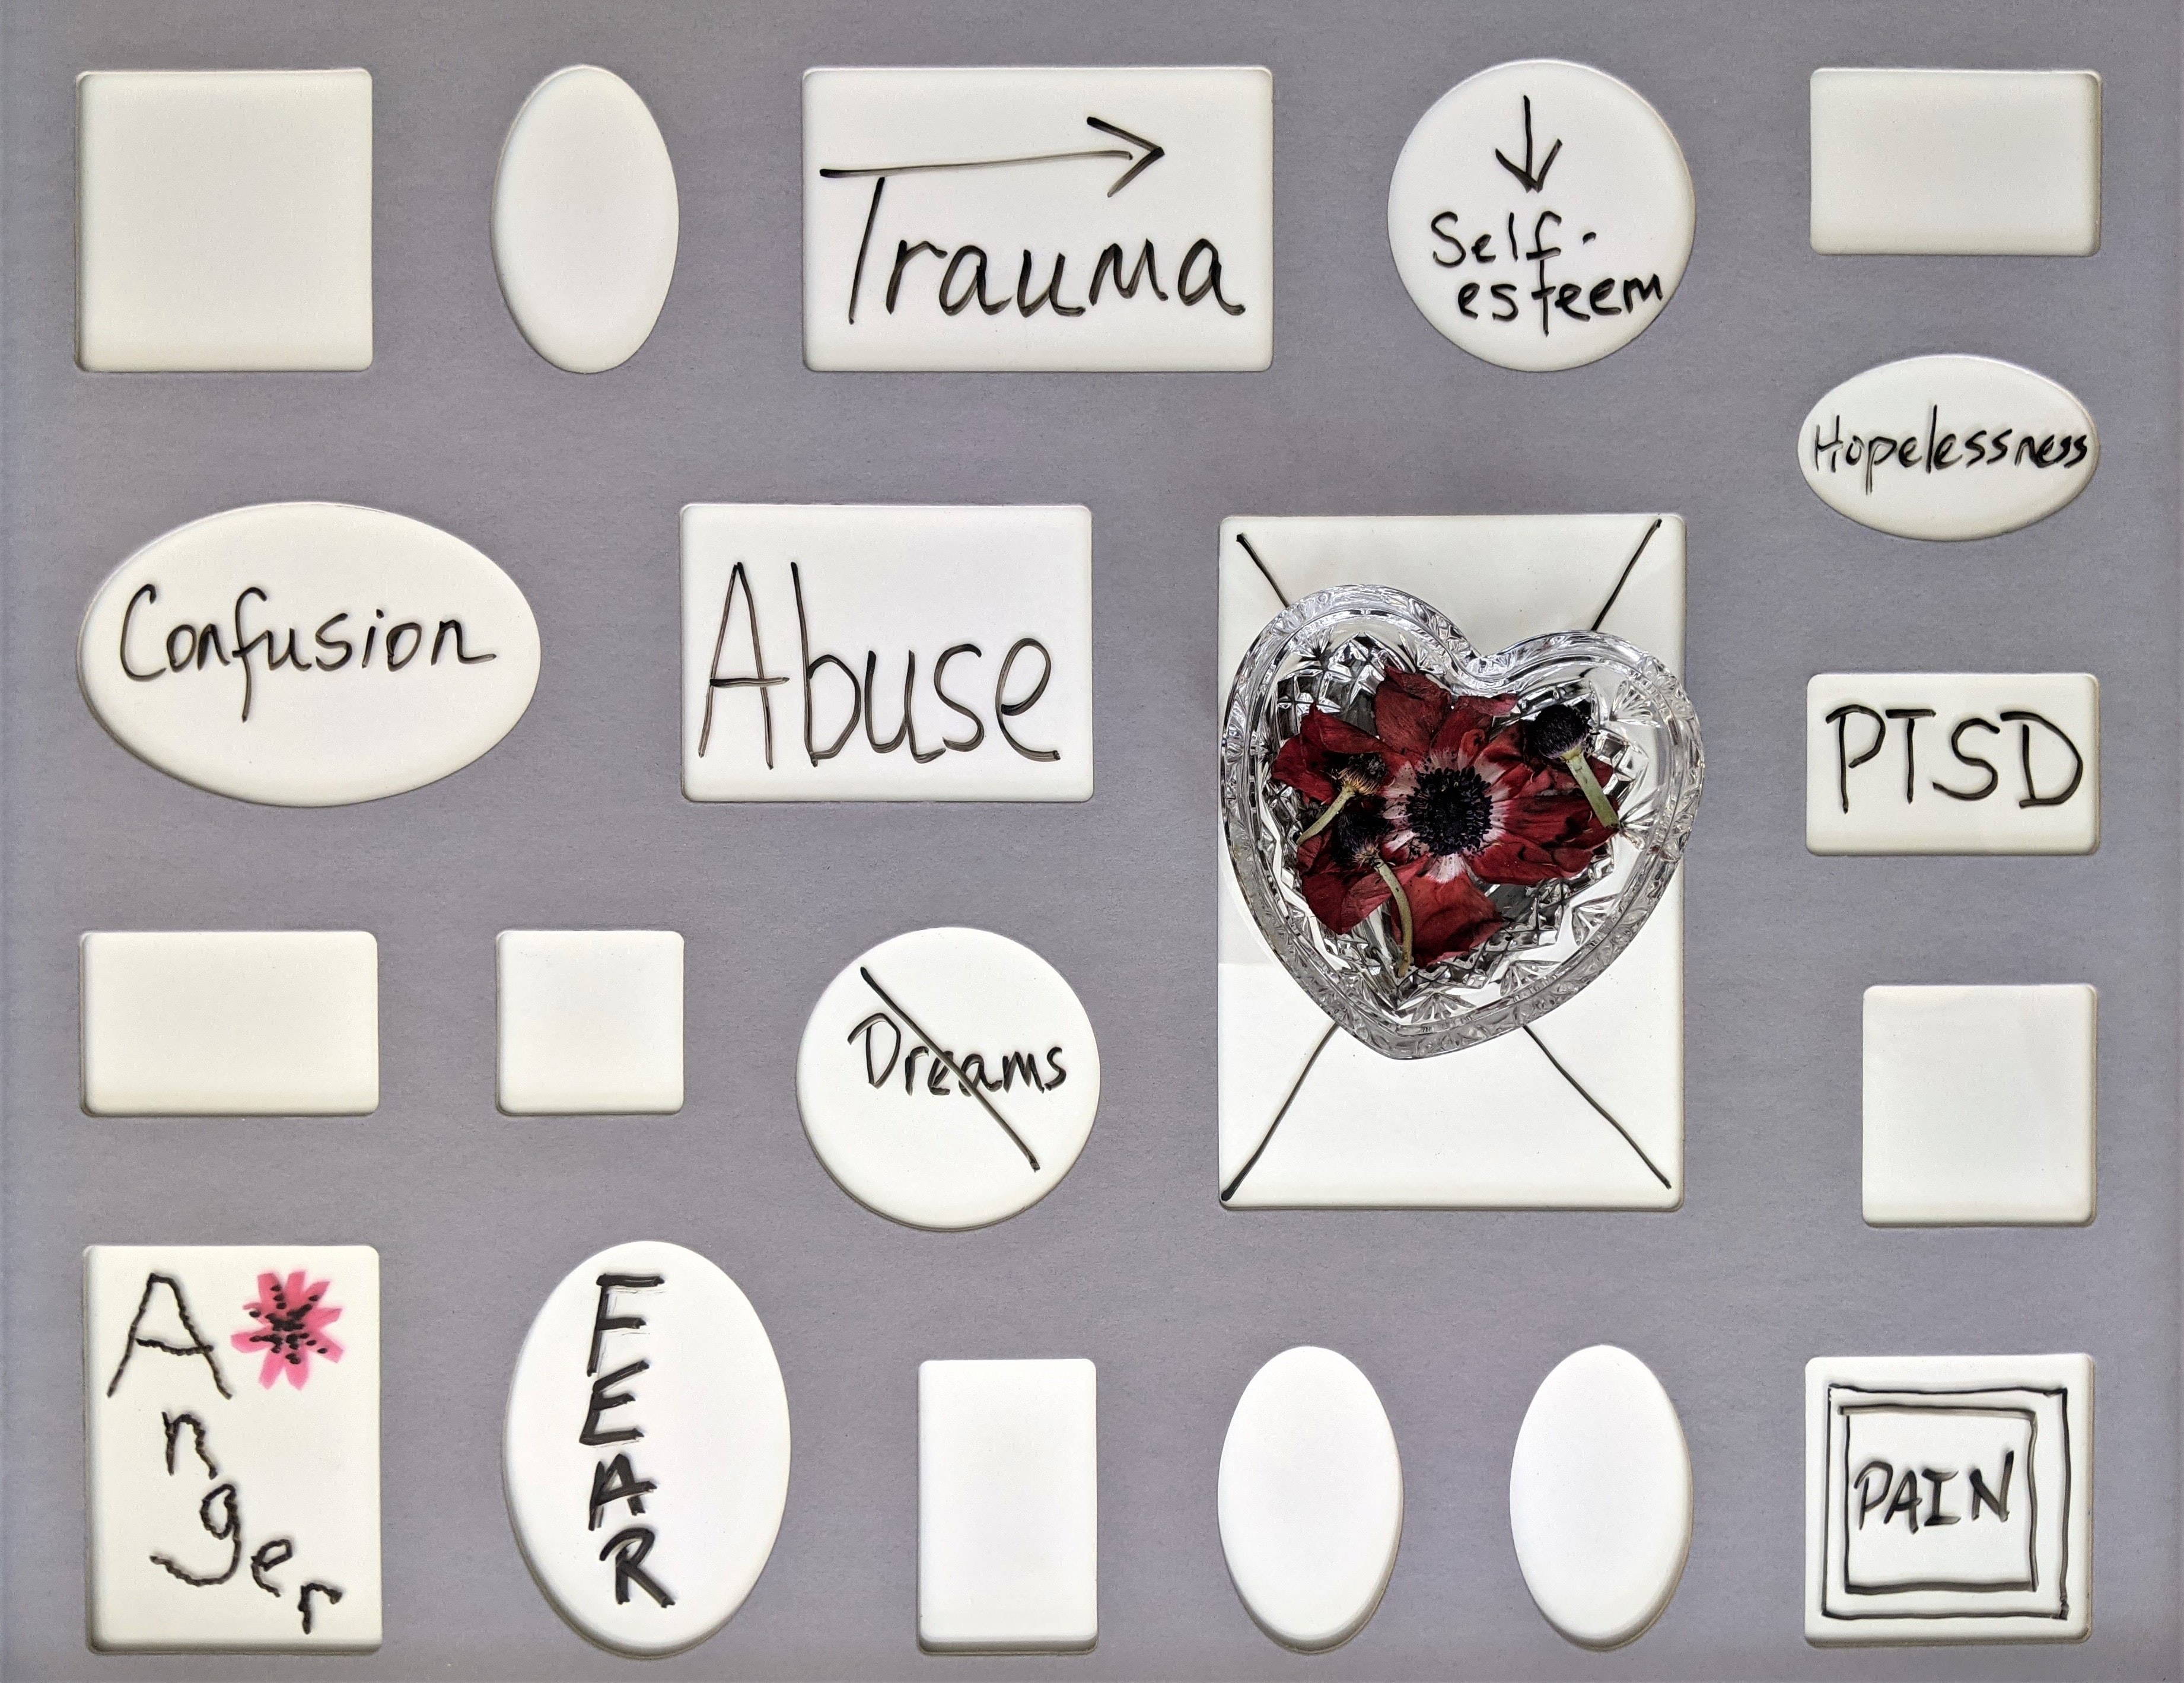 5 Teletherapy Best Practices to Help Trauma Survivors